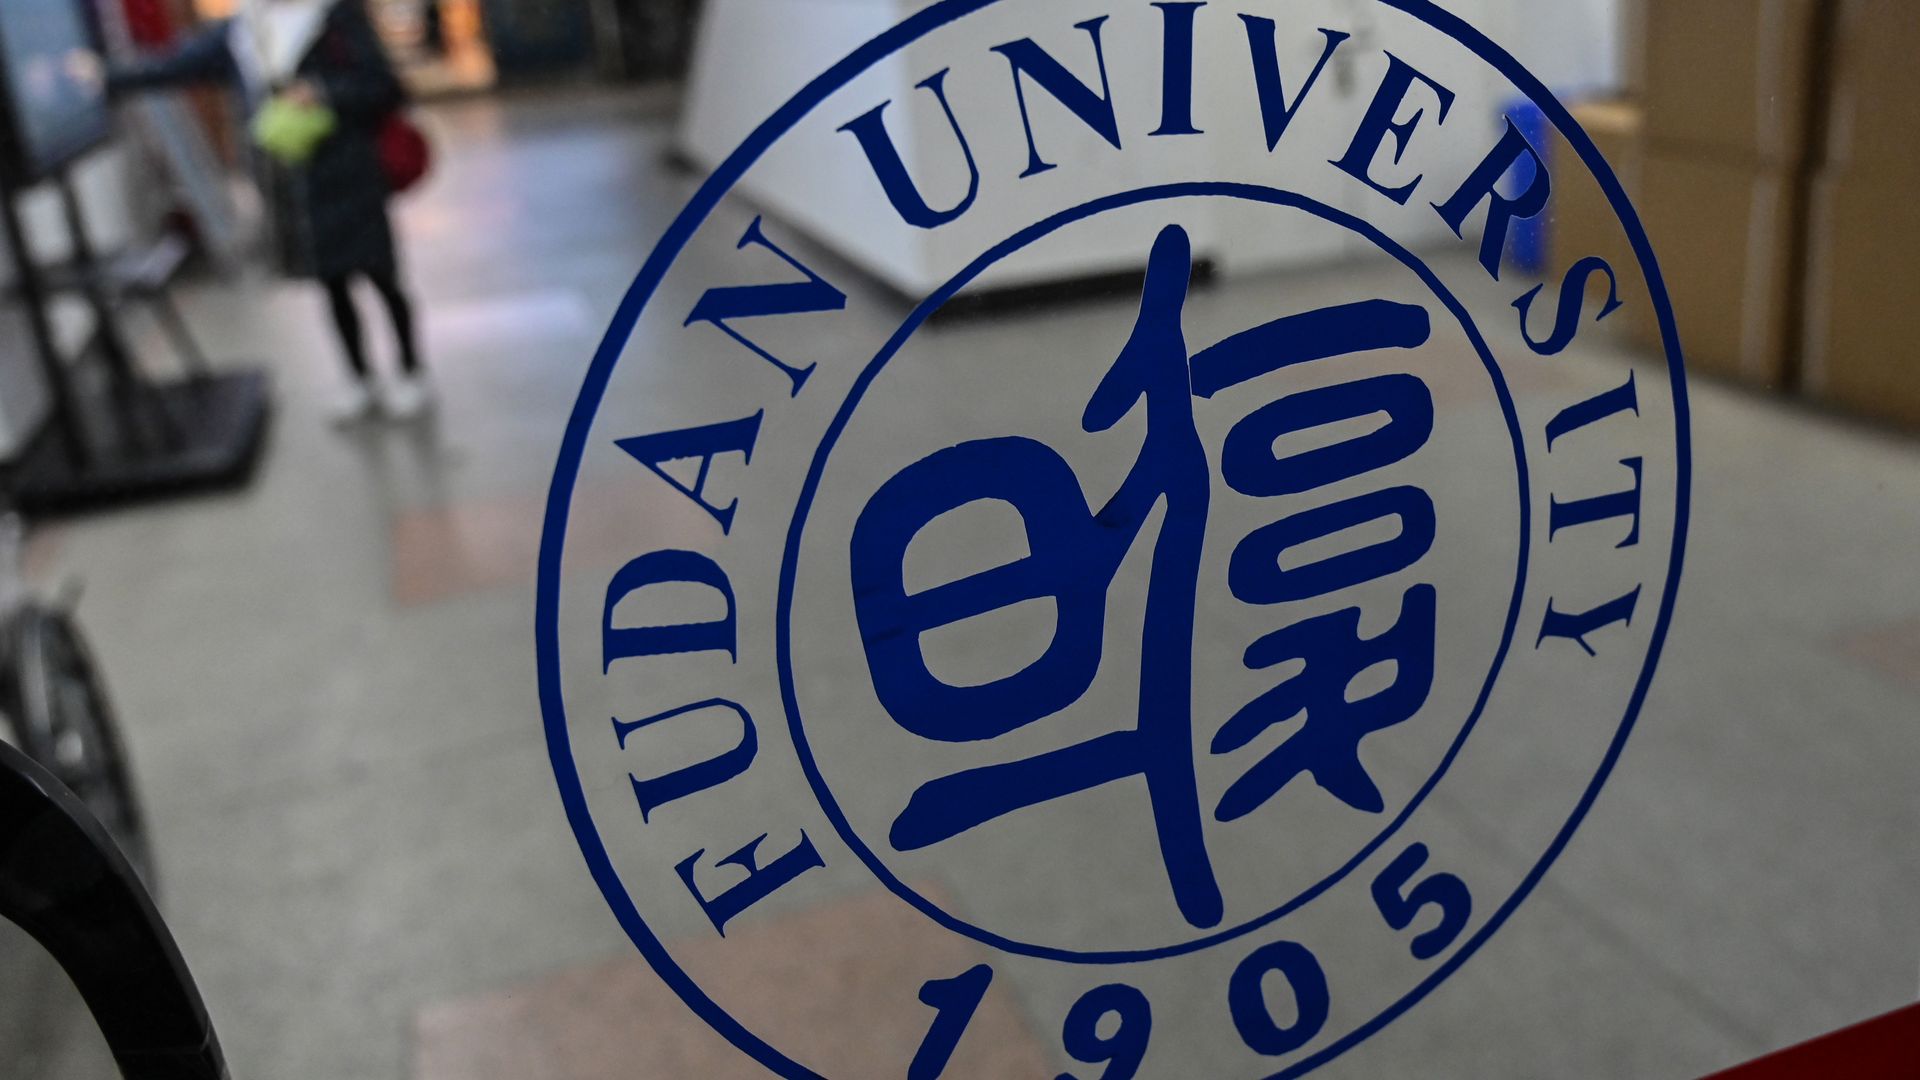 Fudan University's logo embossed on a glass door